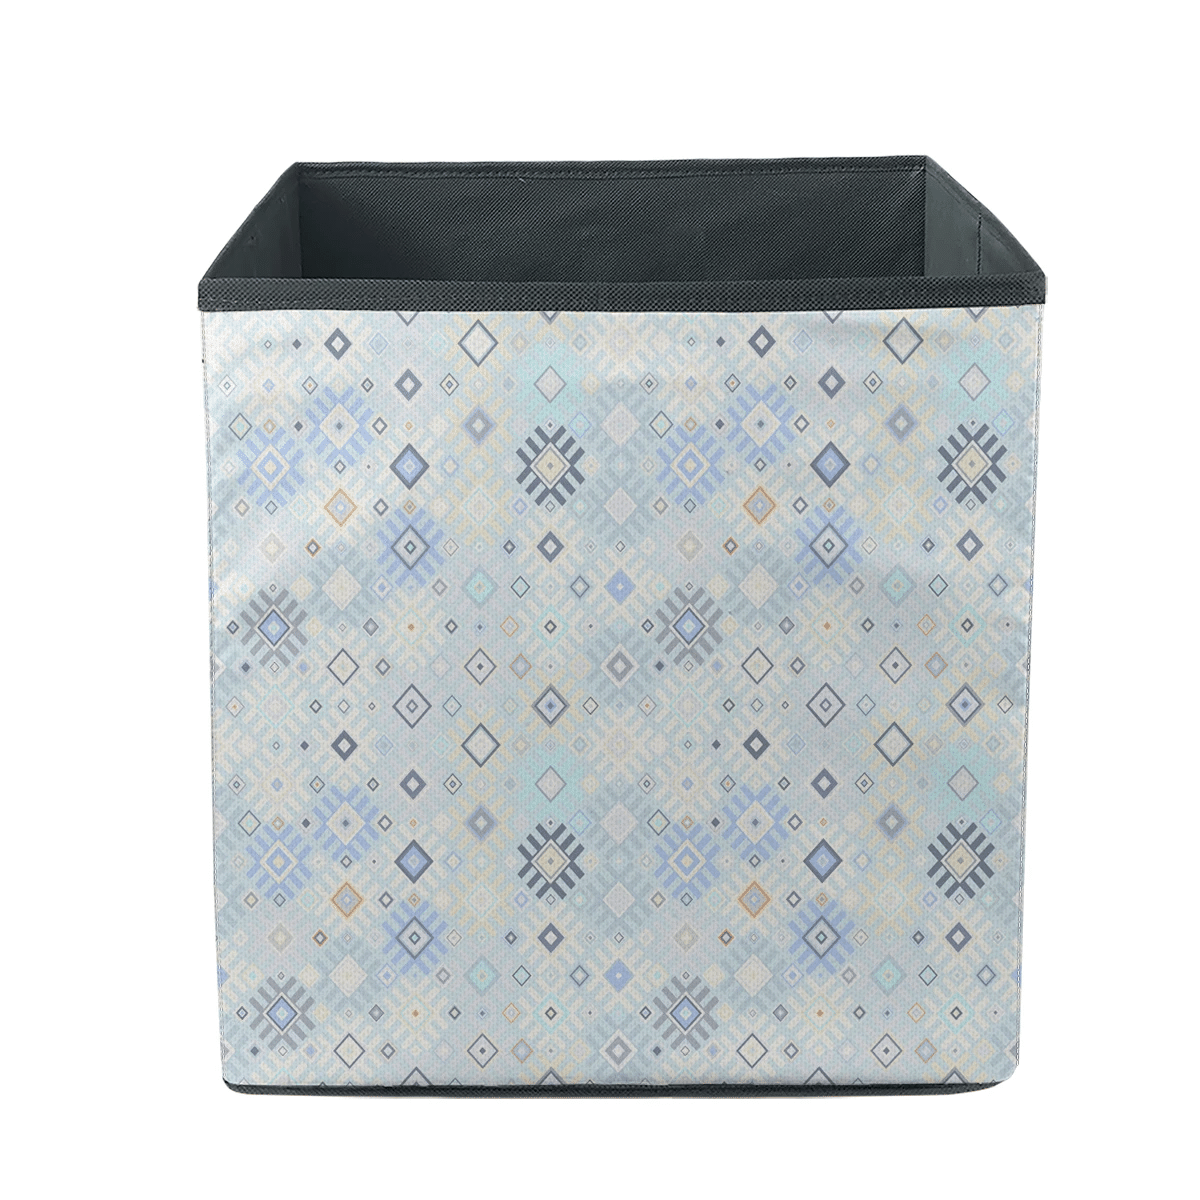 Modern Hipster Snow Ethnic Geometric Folk Style Storage Bin Storage Cube